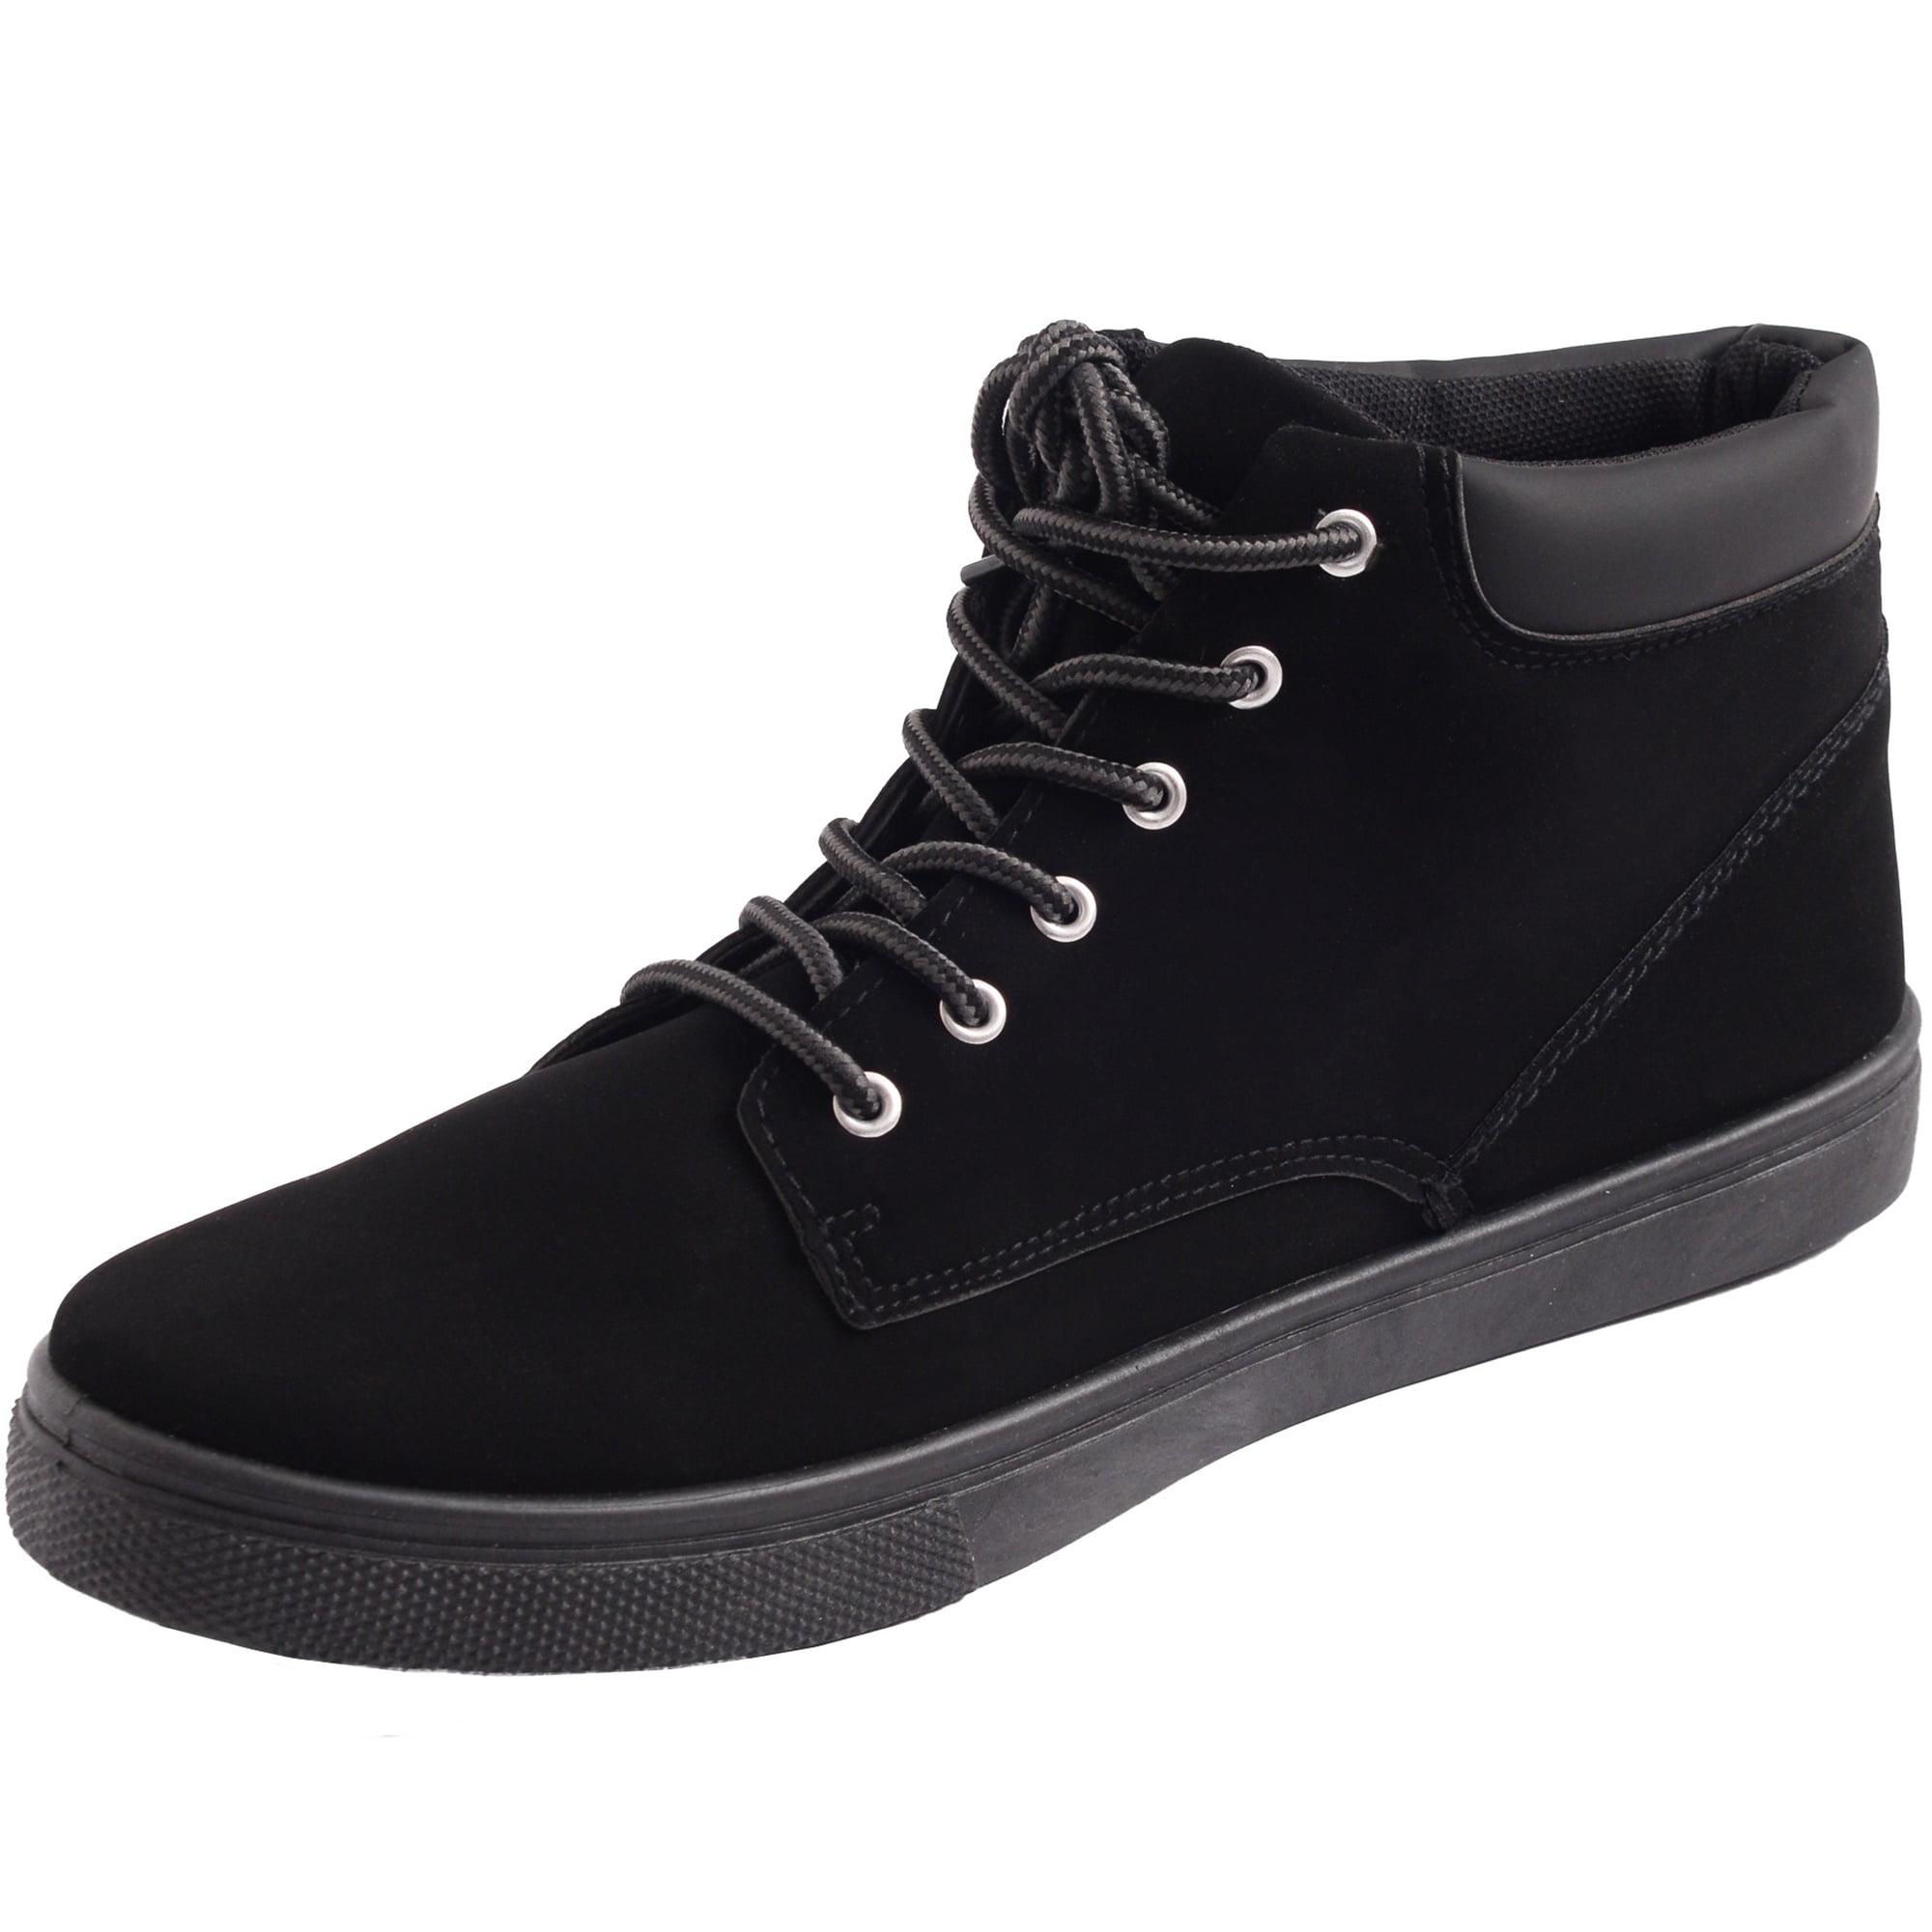 Cat and Jack Arlie Black High Top Sneaker Lace Up Shoe Boys Kids Black Size 1 